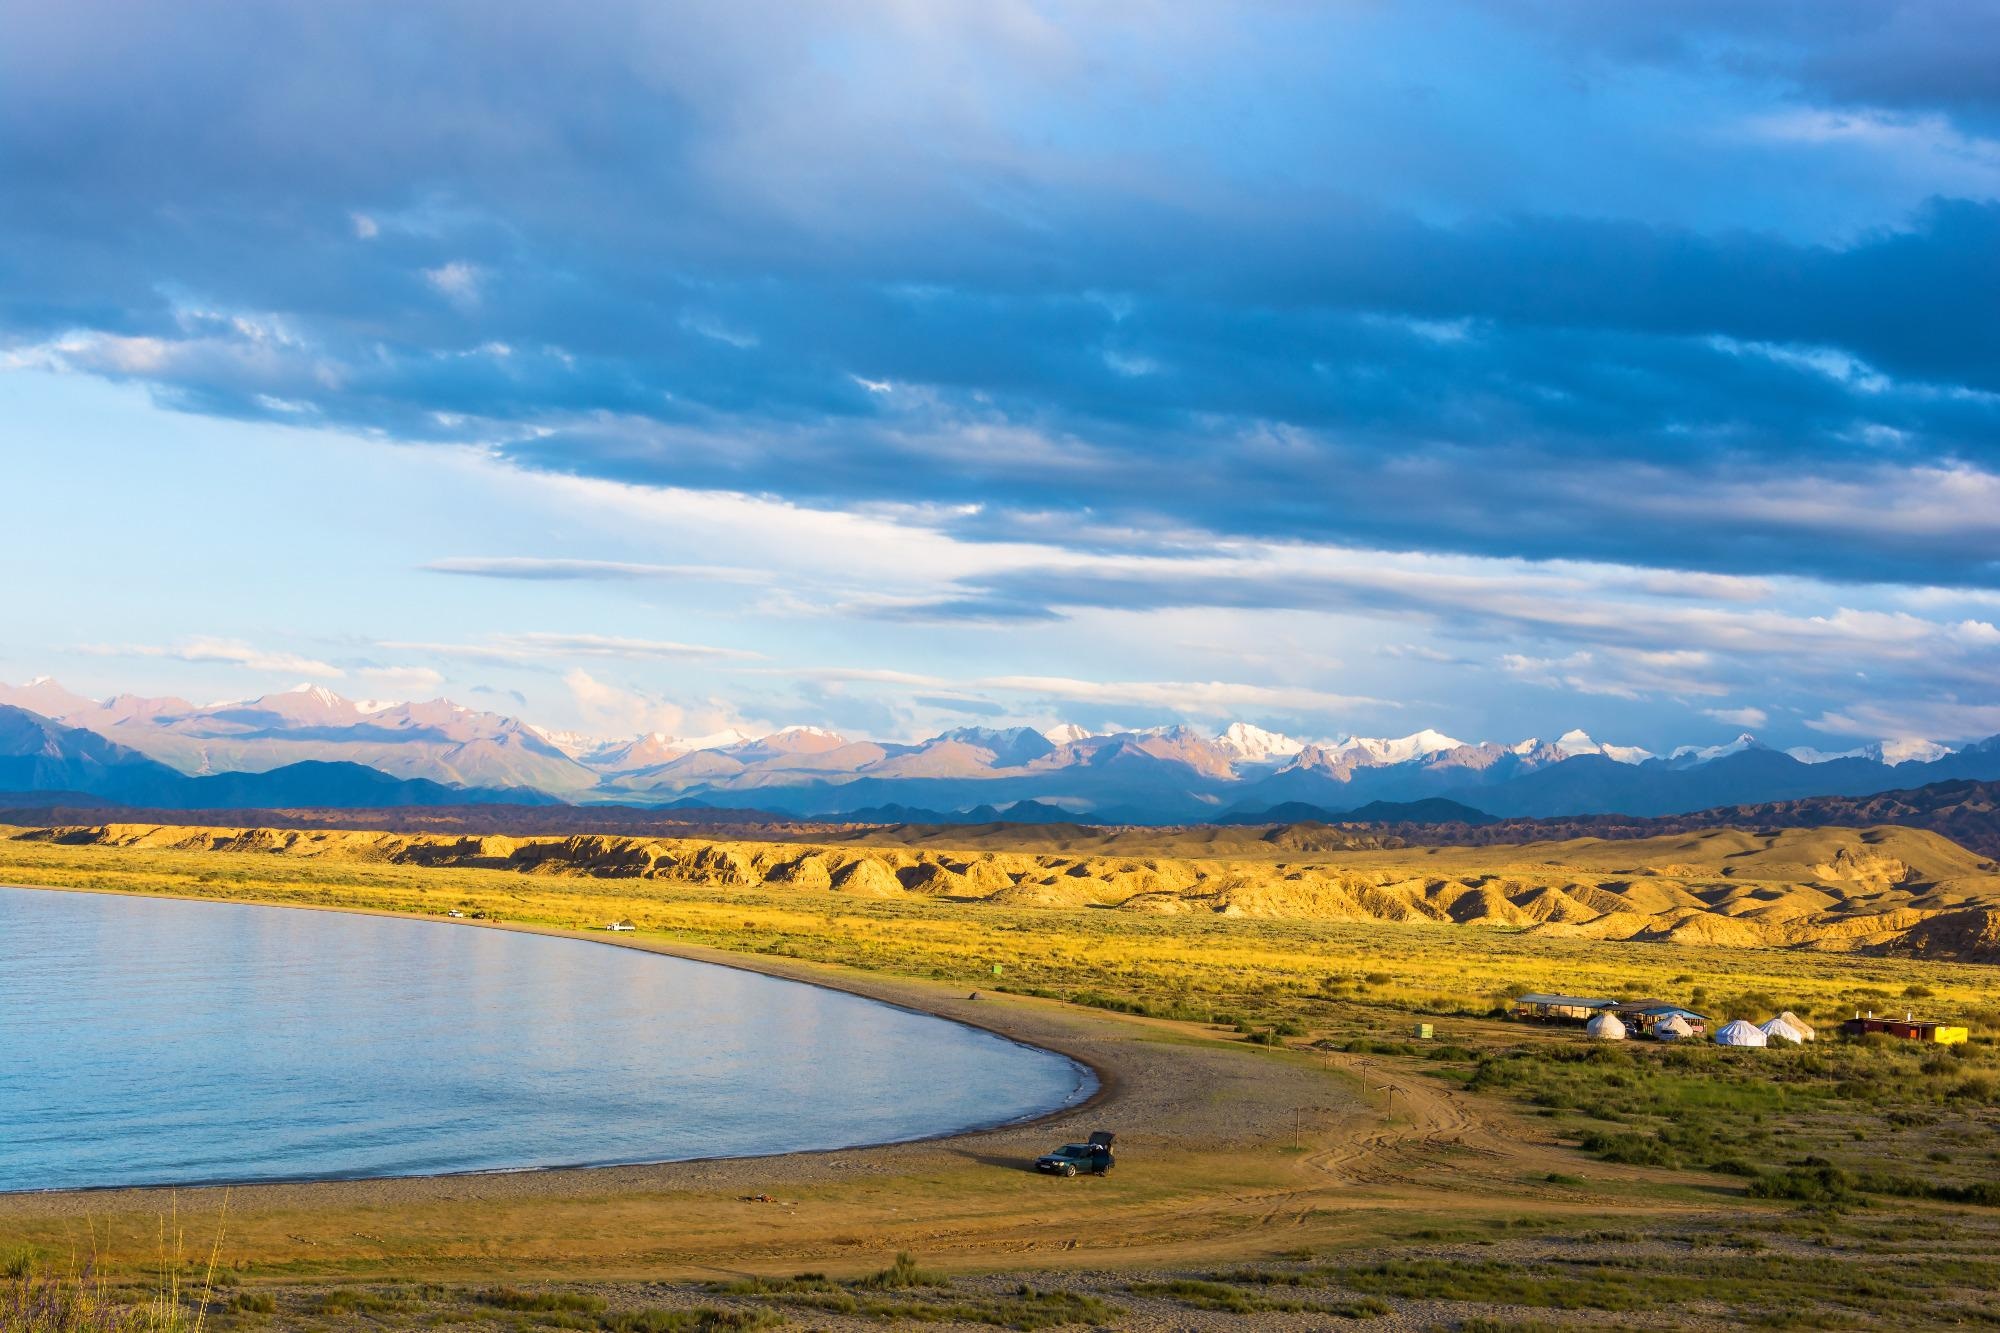 Lake Issyk-Kul in the summer day, Kyrgyzstan. Image Credit: V. Smirnov / Shutterstock